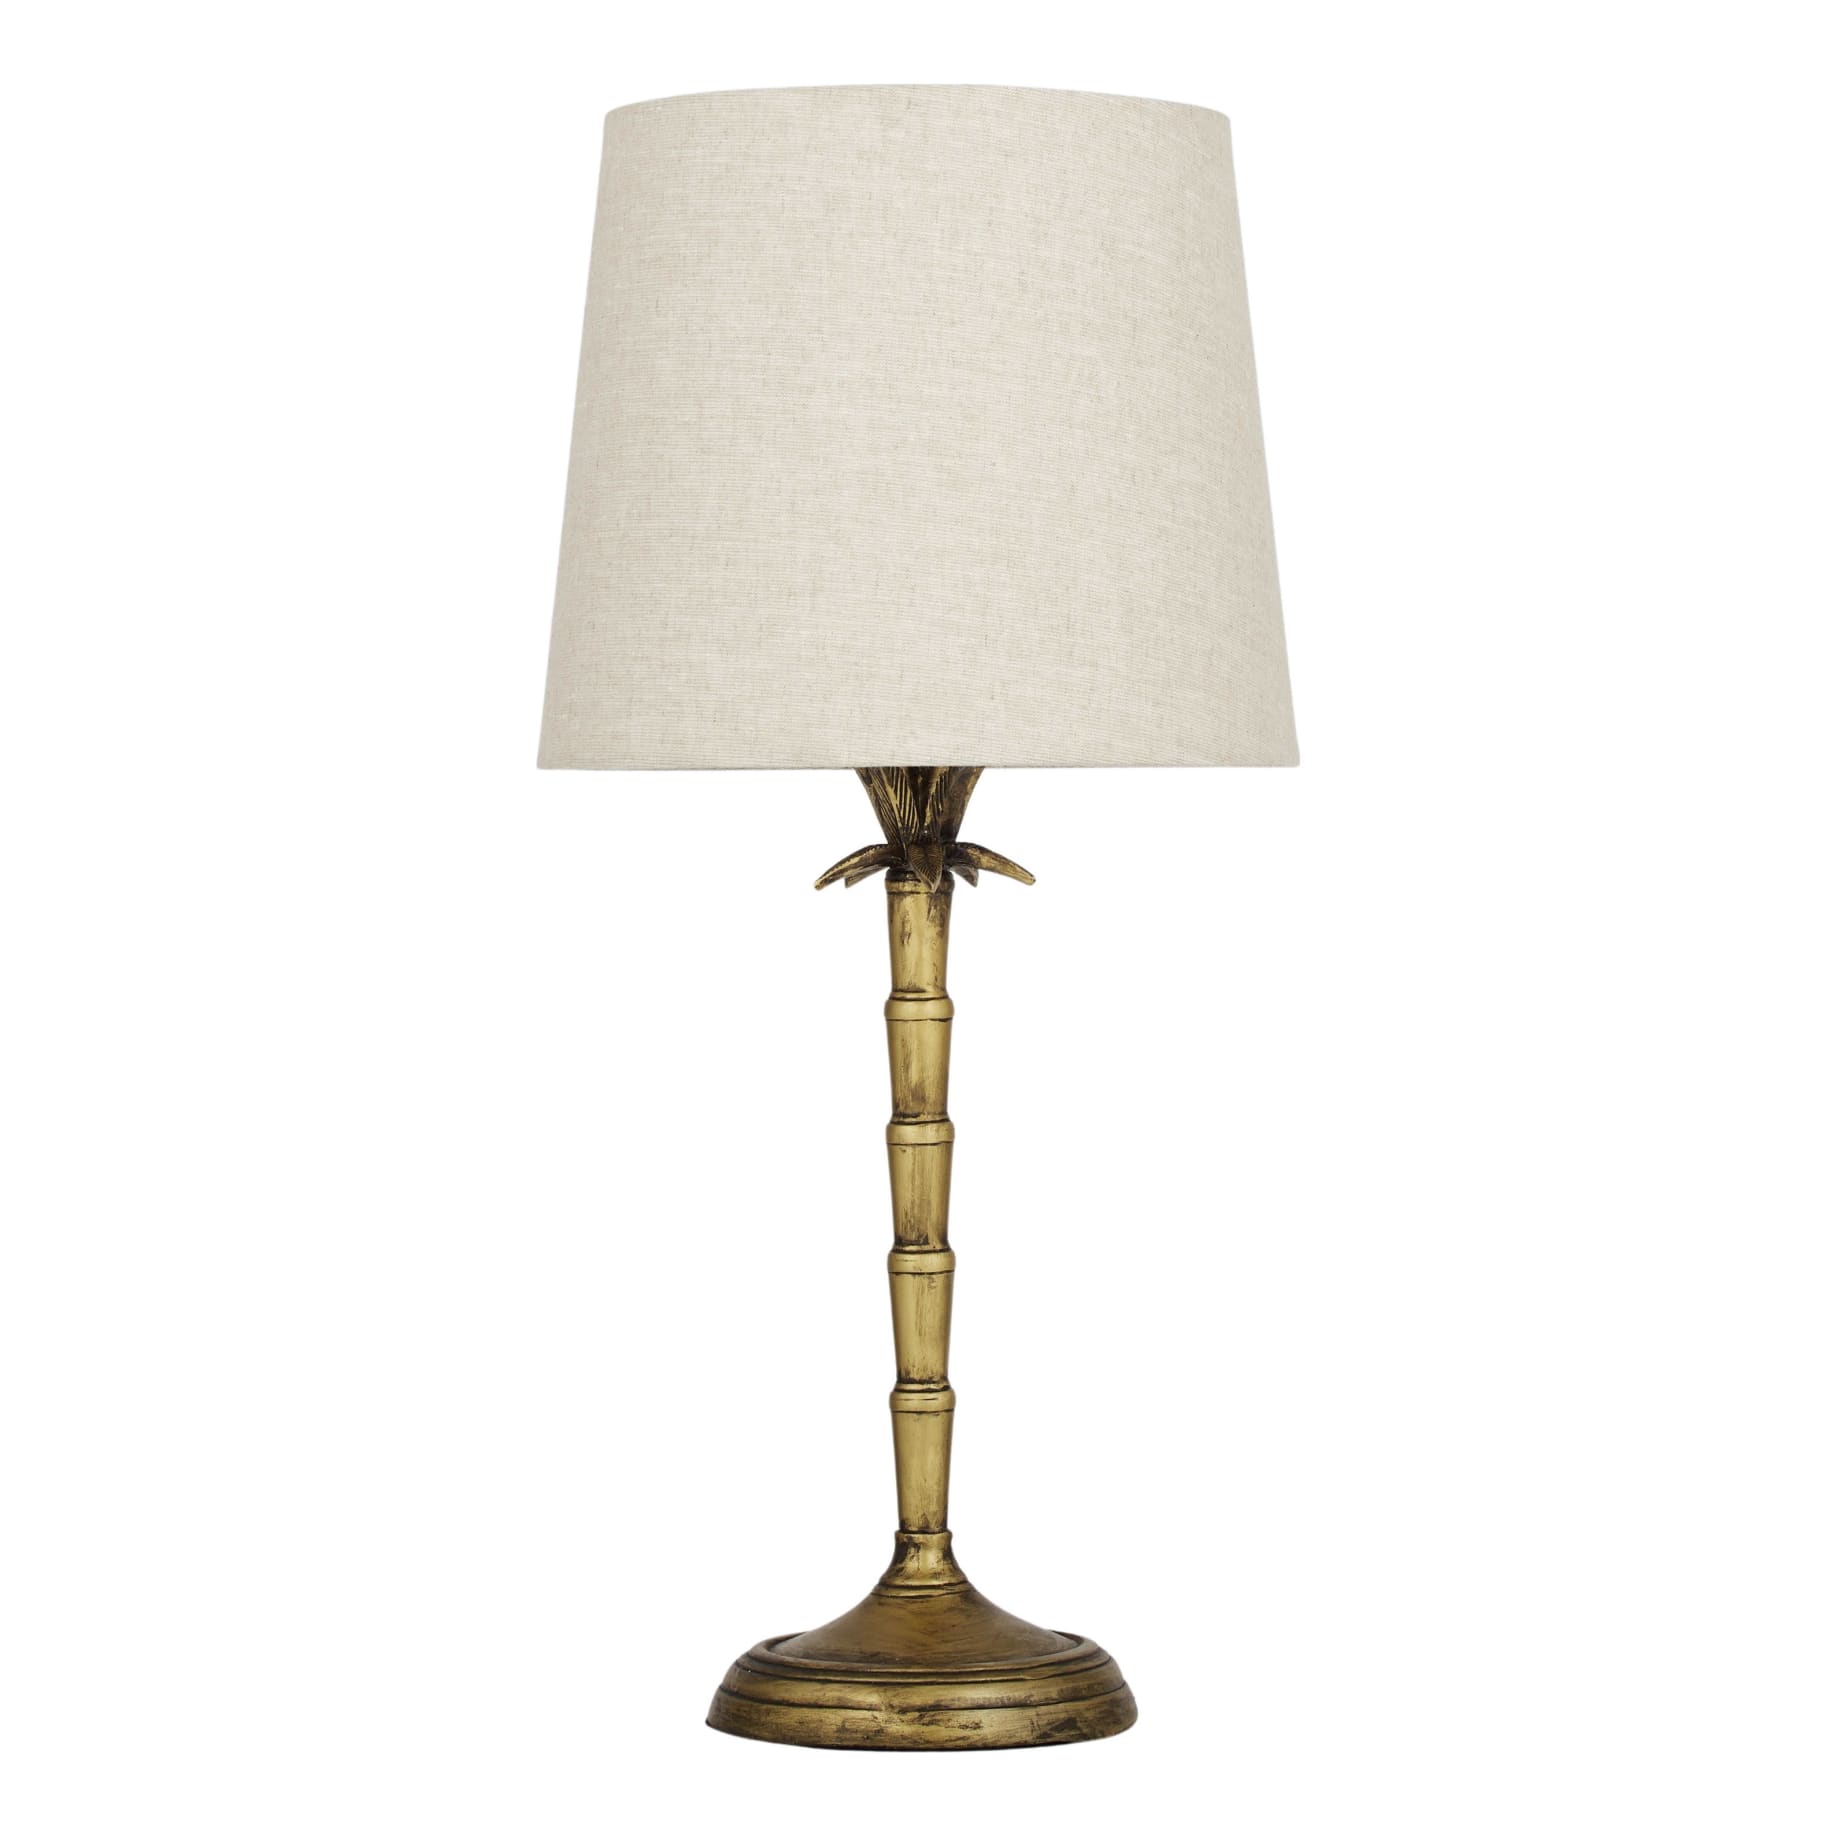 Pina Colada Table Lamp 33x68cm in Gold/Natural